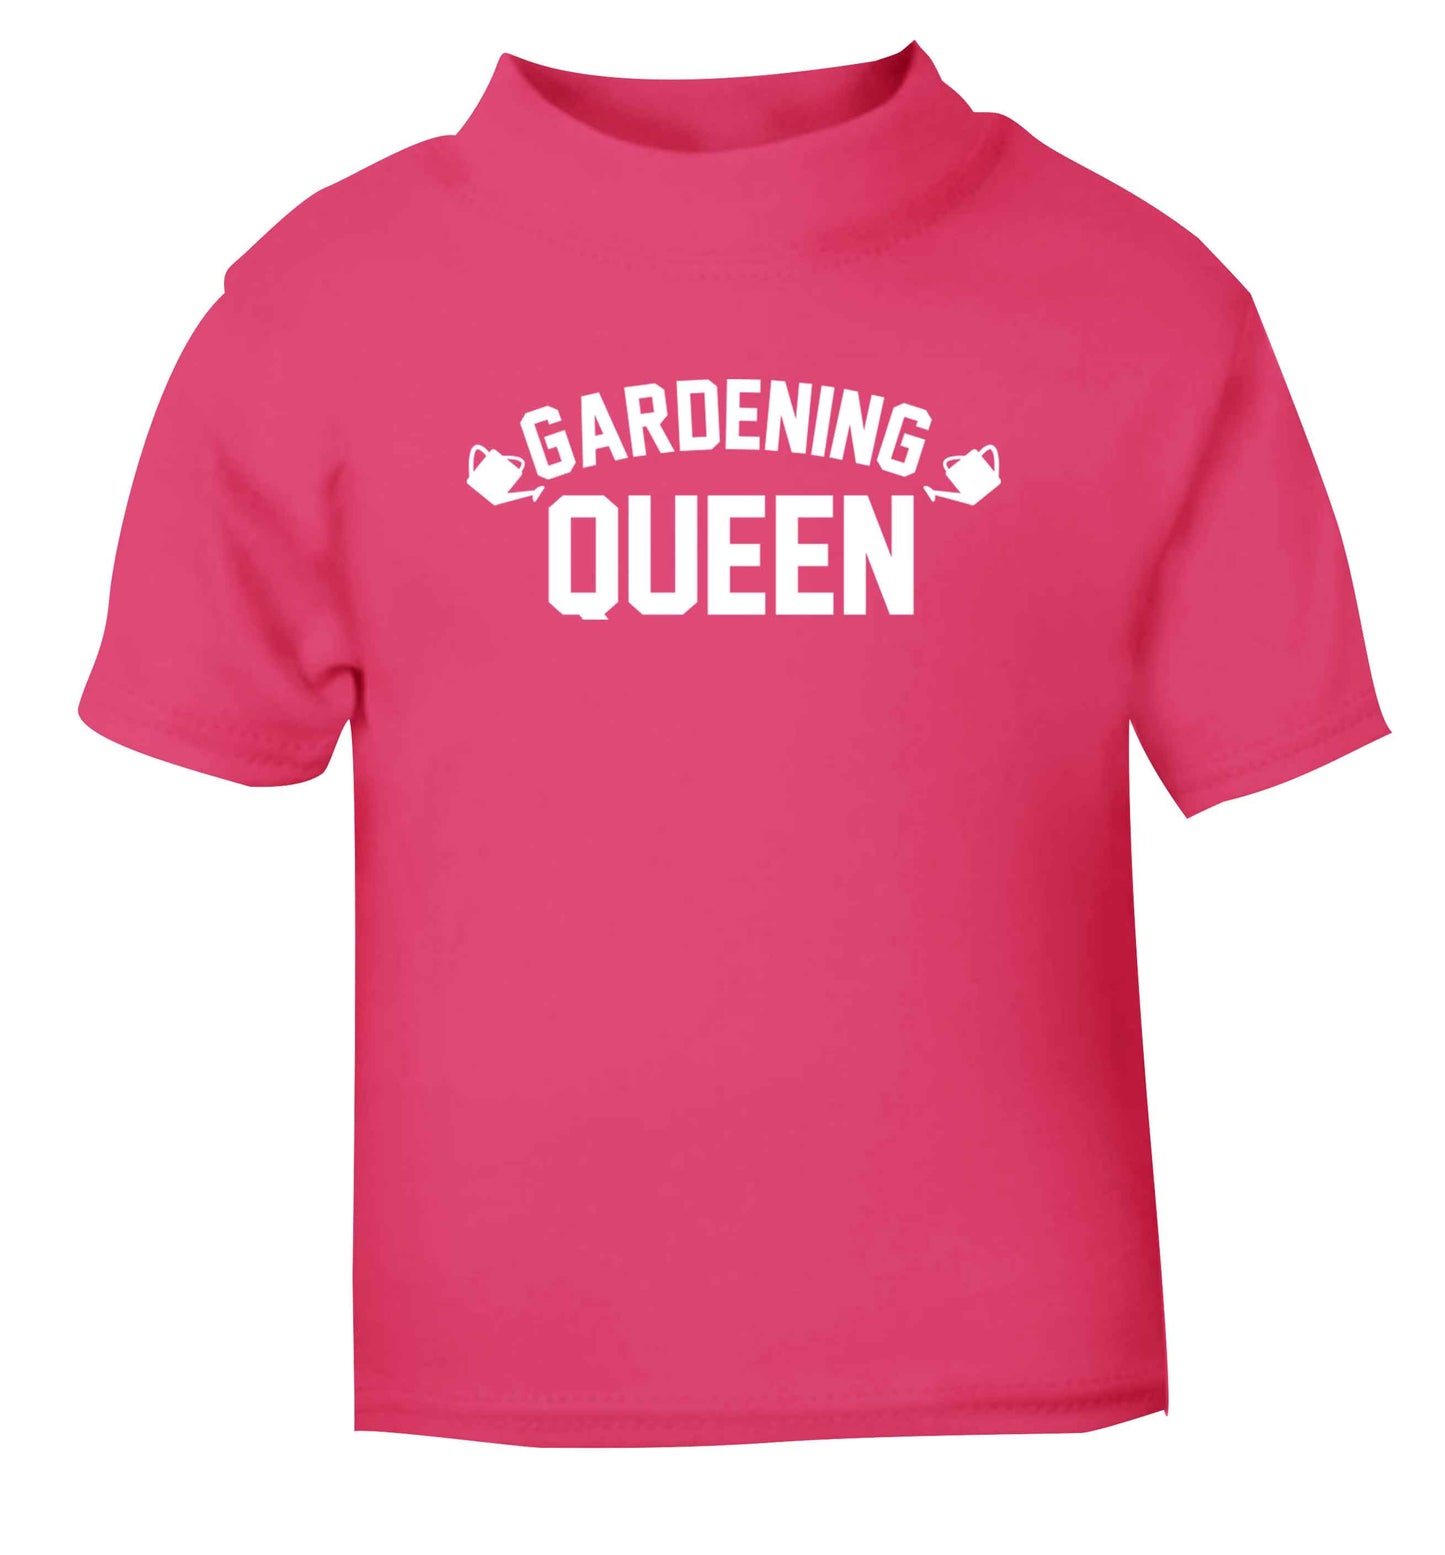 Gardening queen pink Baby Toddler Tshirt 2 Years